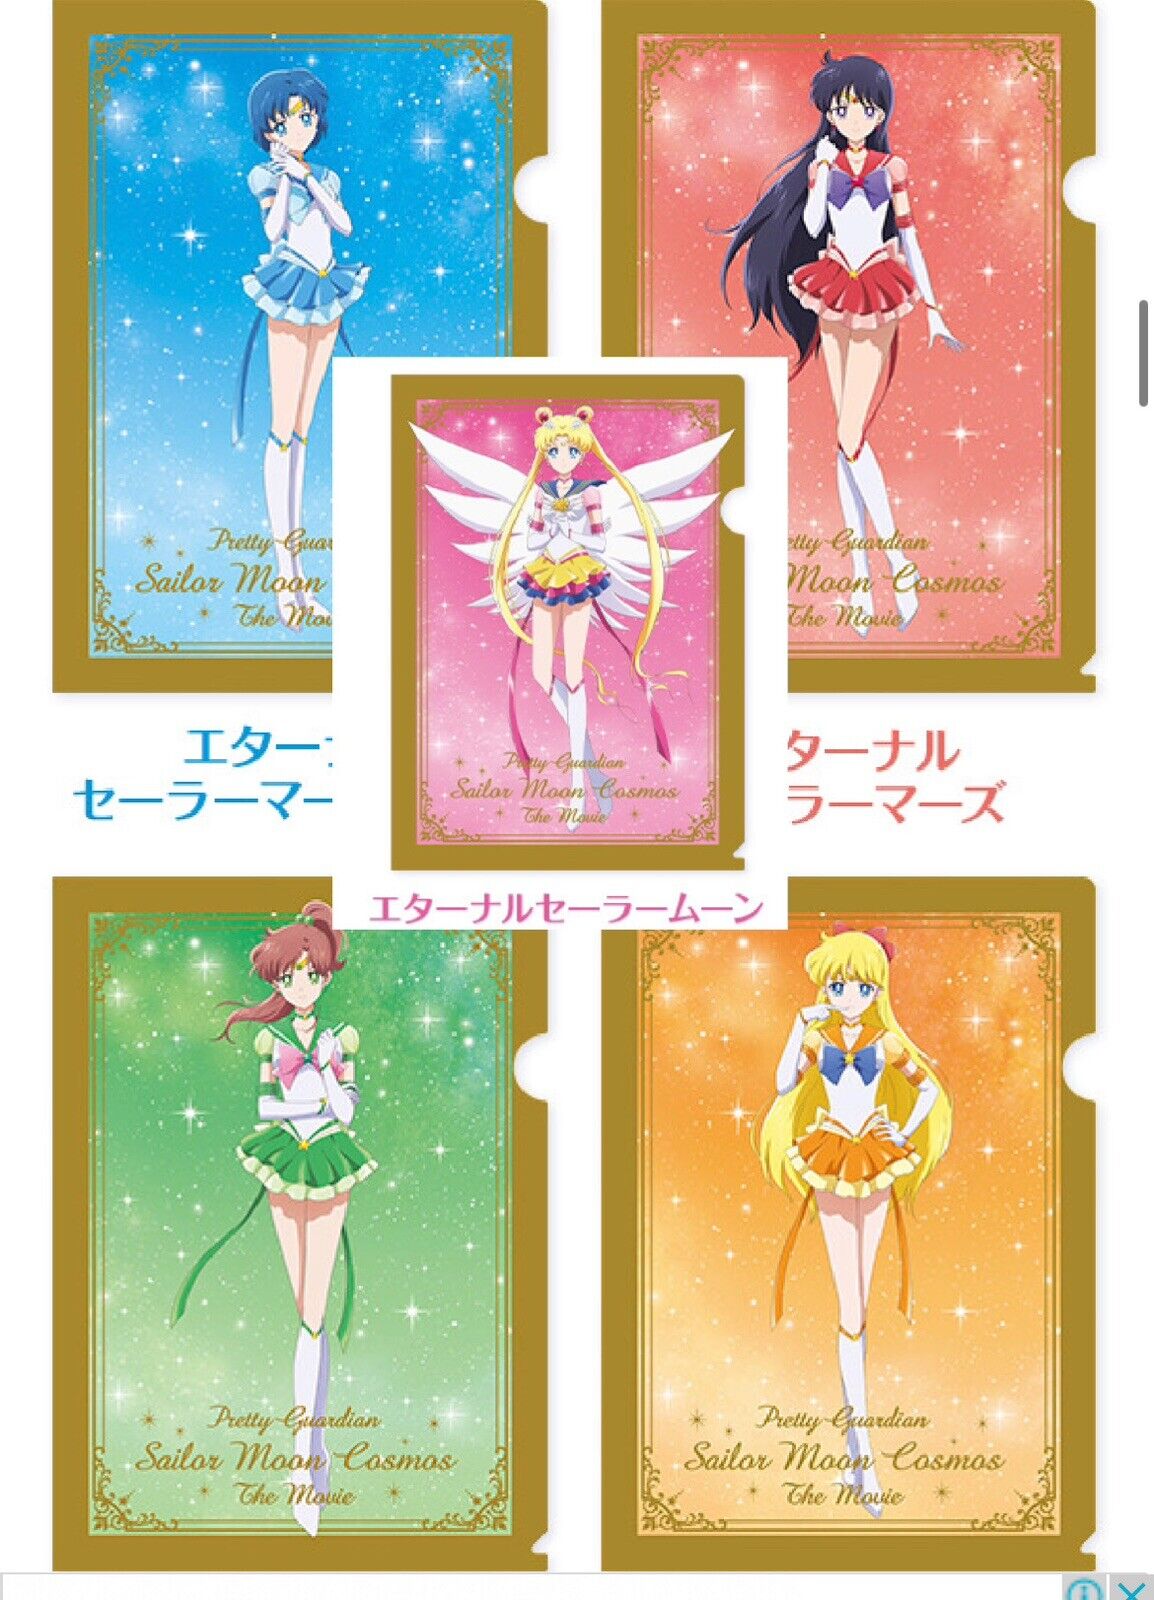 Pretty Guardian Sailor Moon Crystal poster